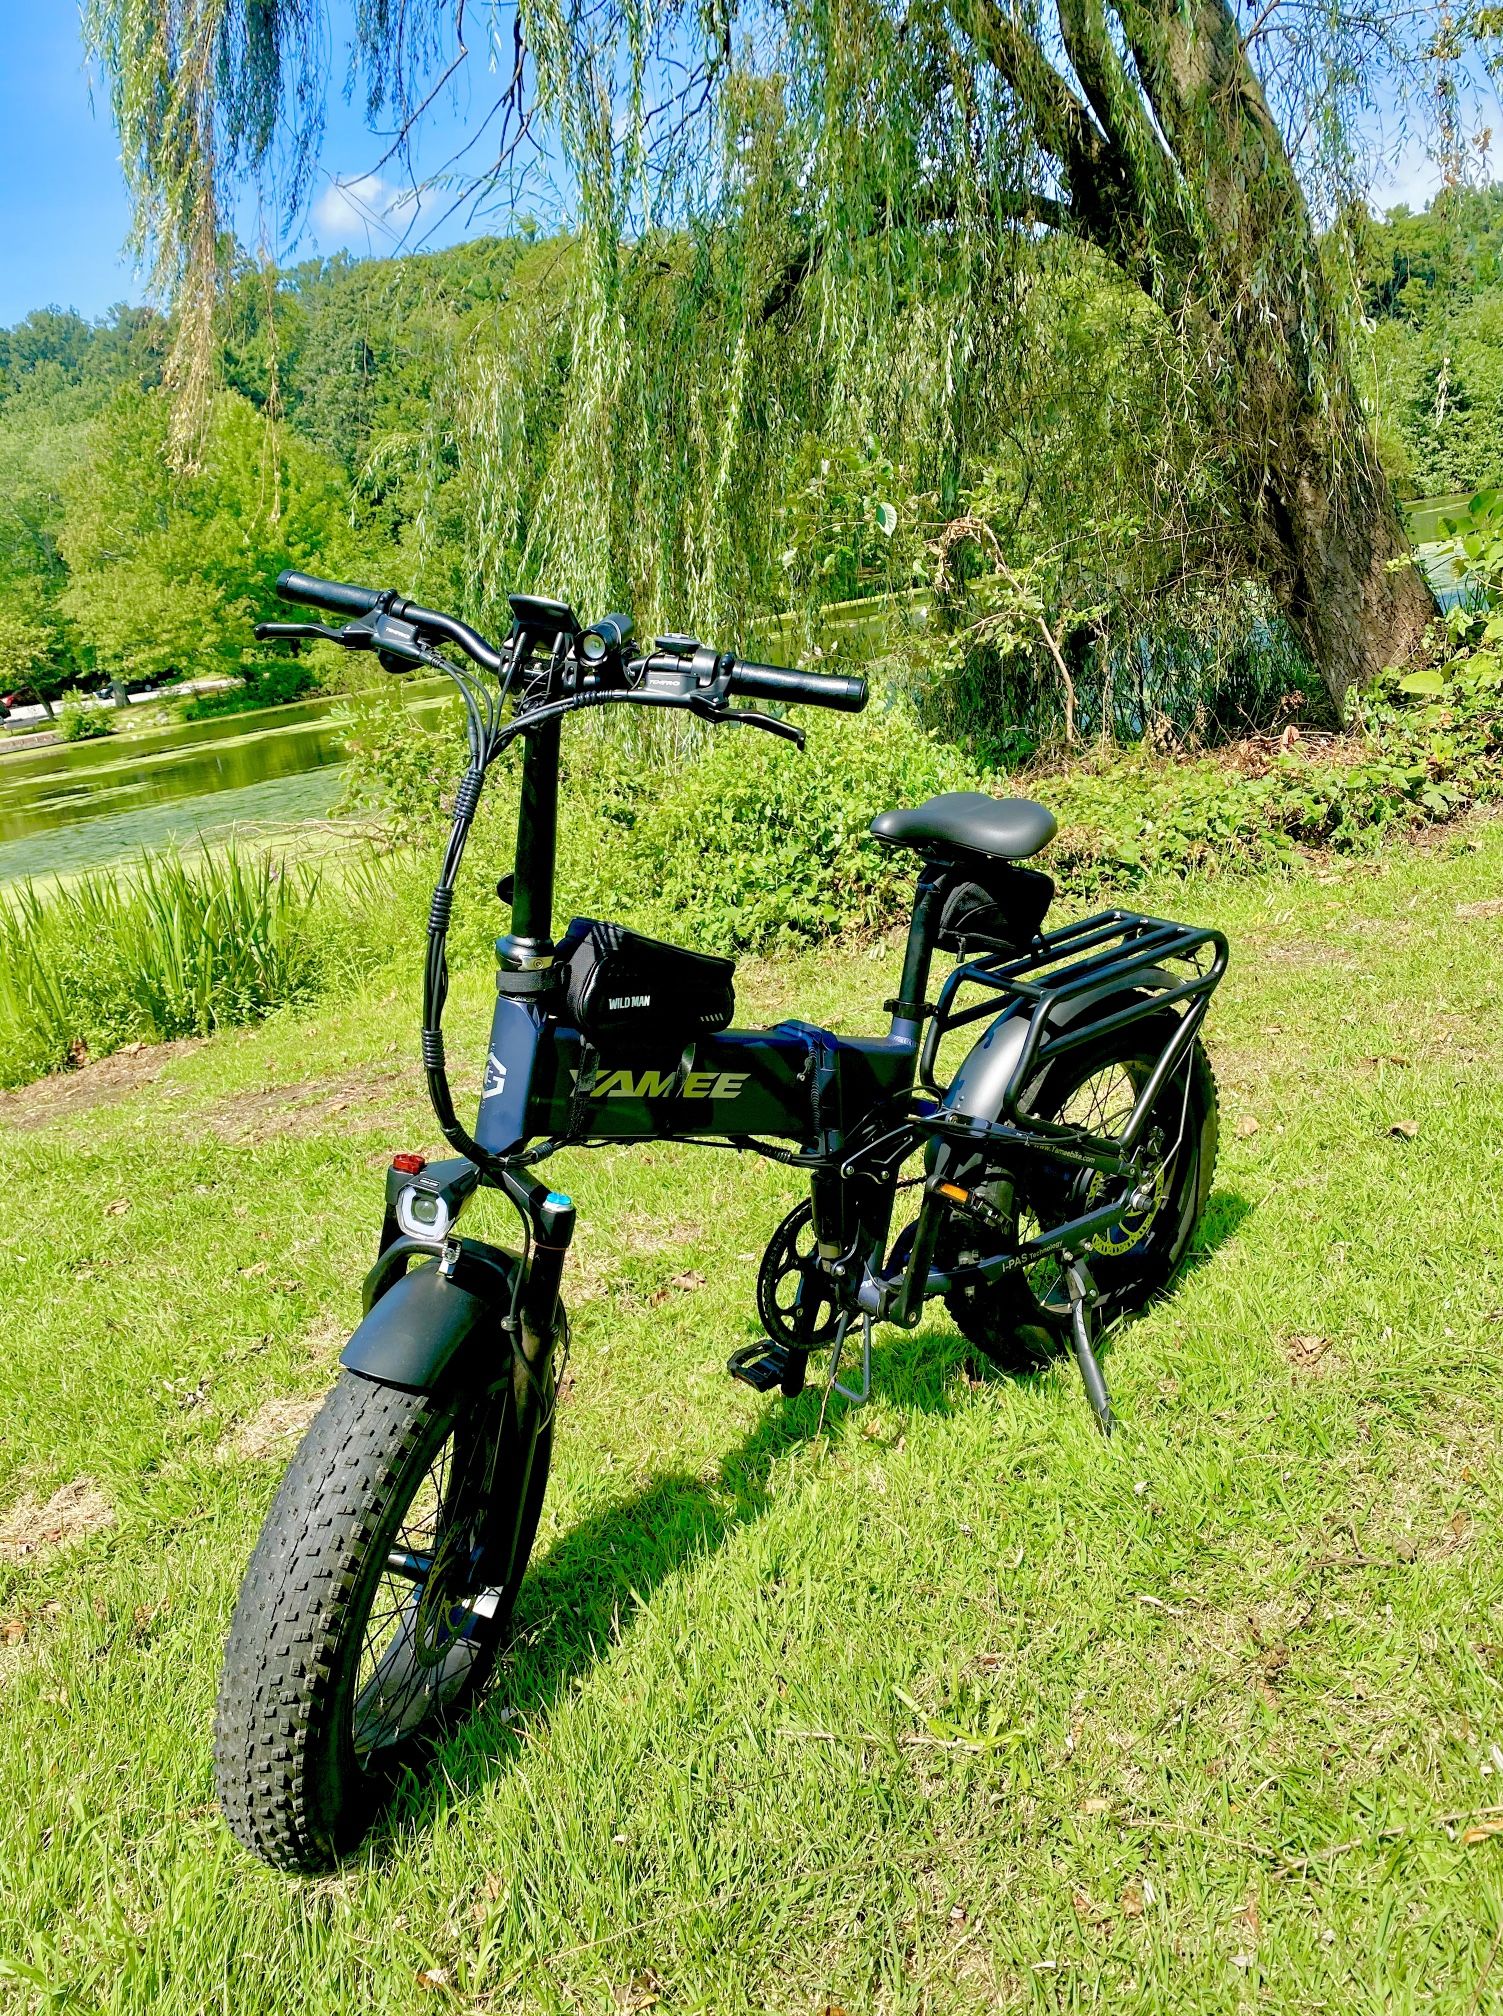 Yamee Ebike Fat Bear Plus 750w 48v 14.5 Folding bike with full suspensions